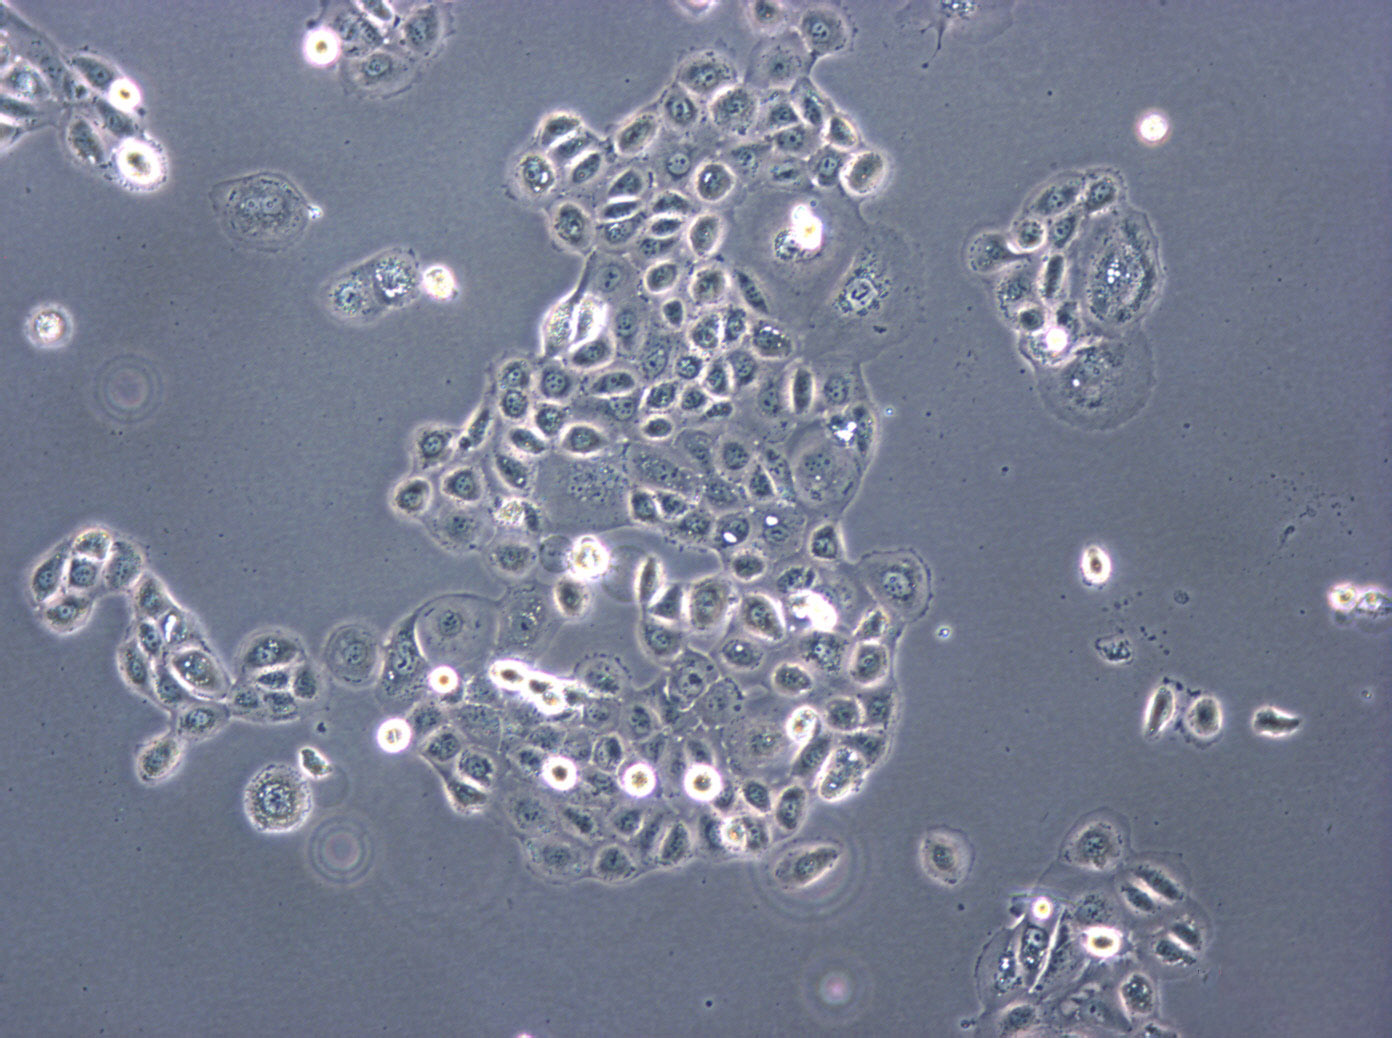 RL95-2 epithelioid cells人子宫内膜癌细胞系,RL95-2 epithelioid cells